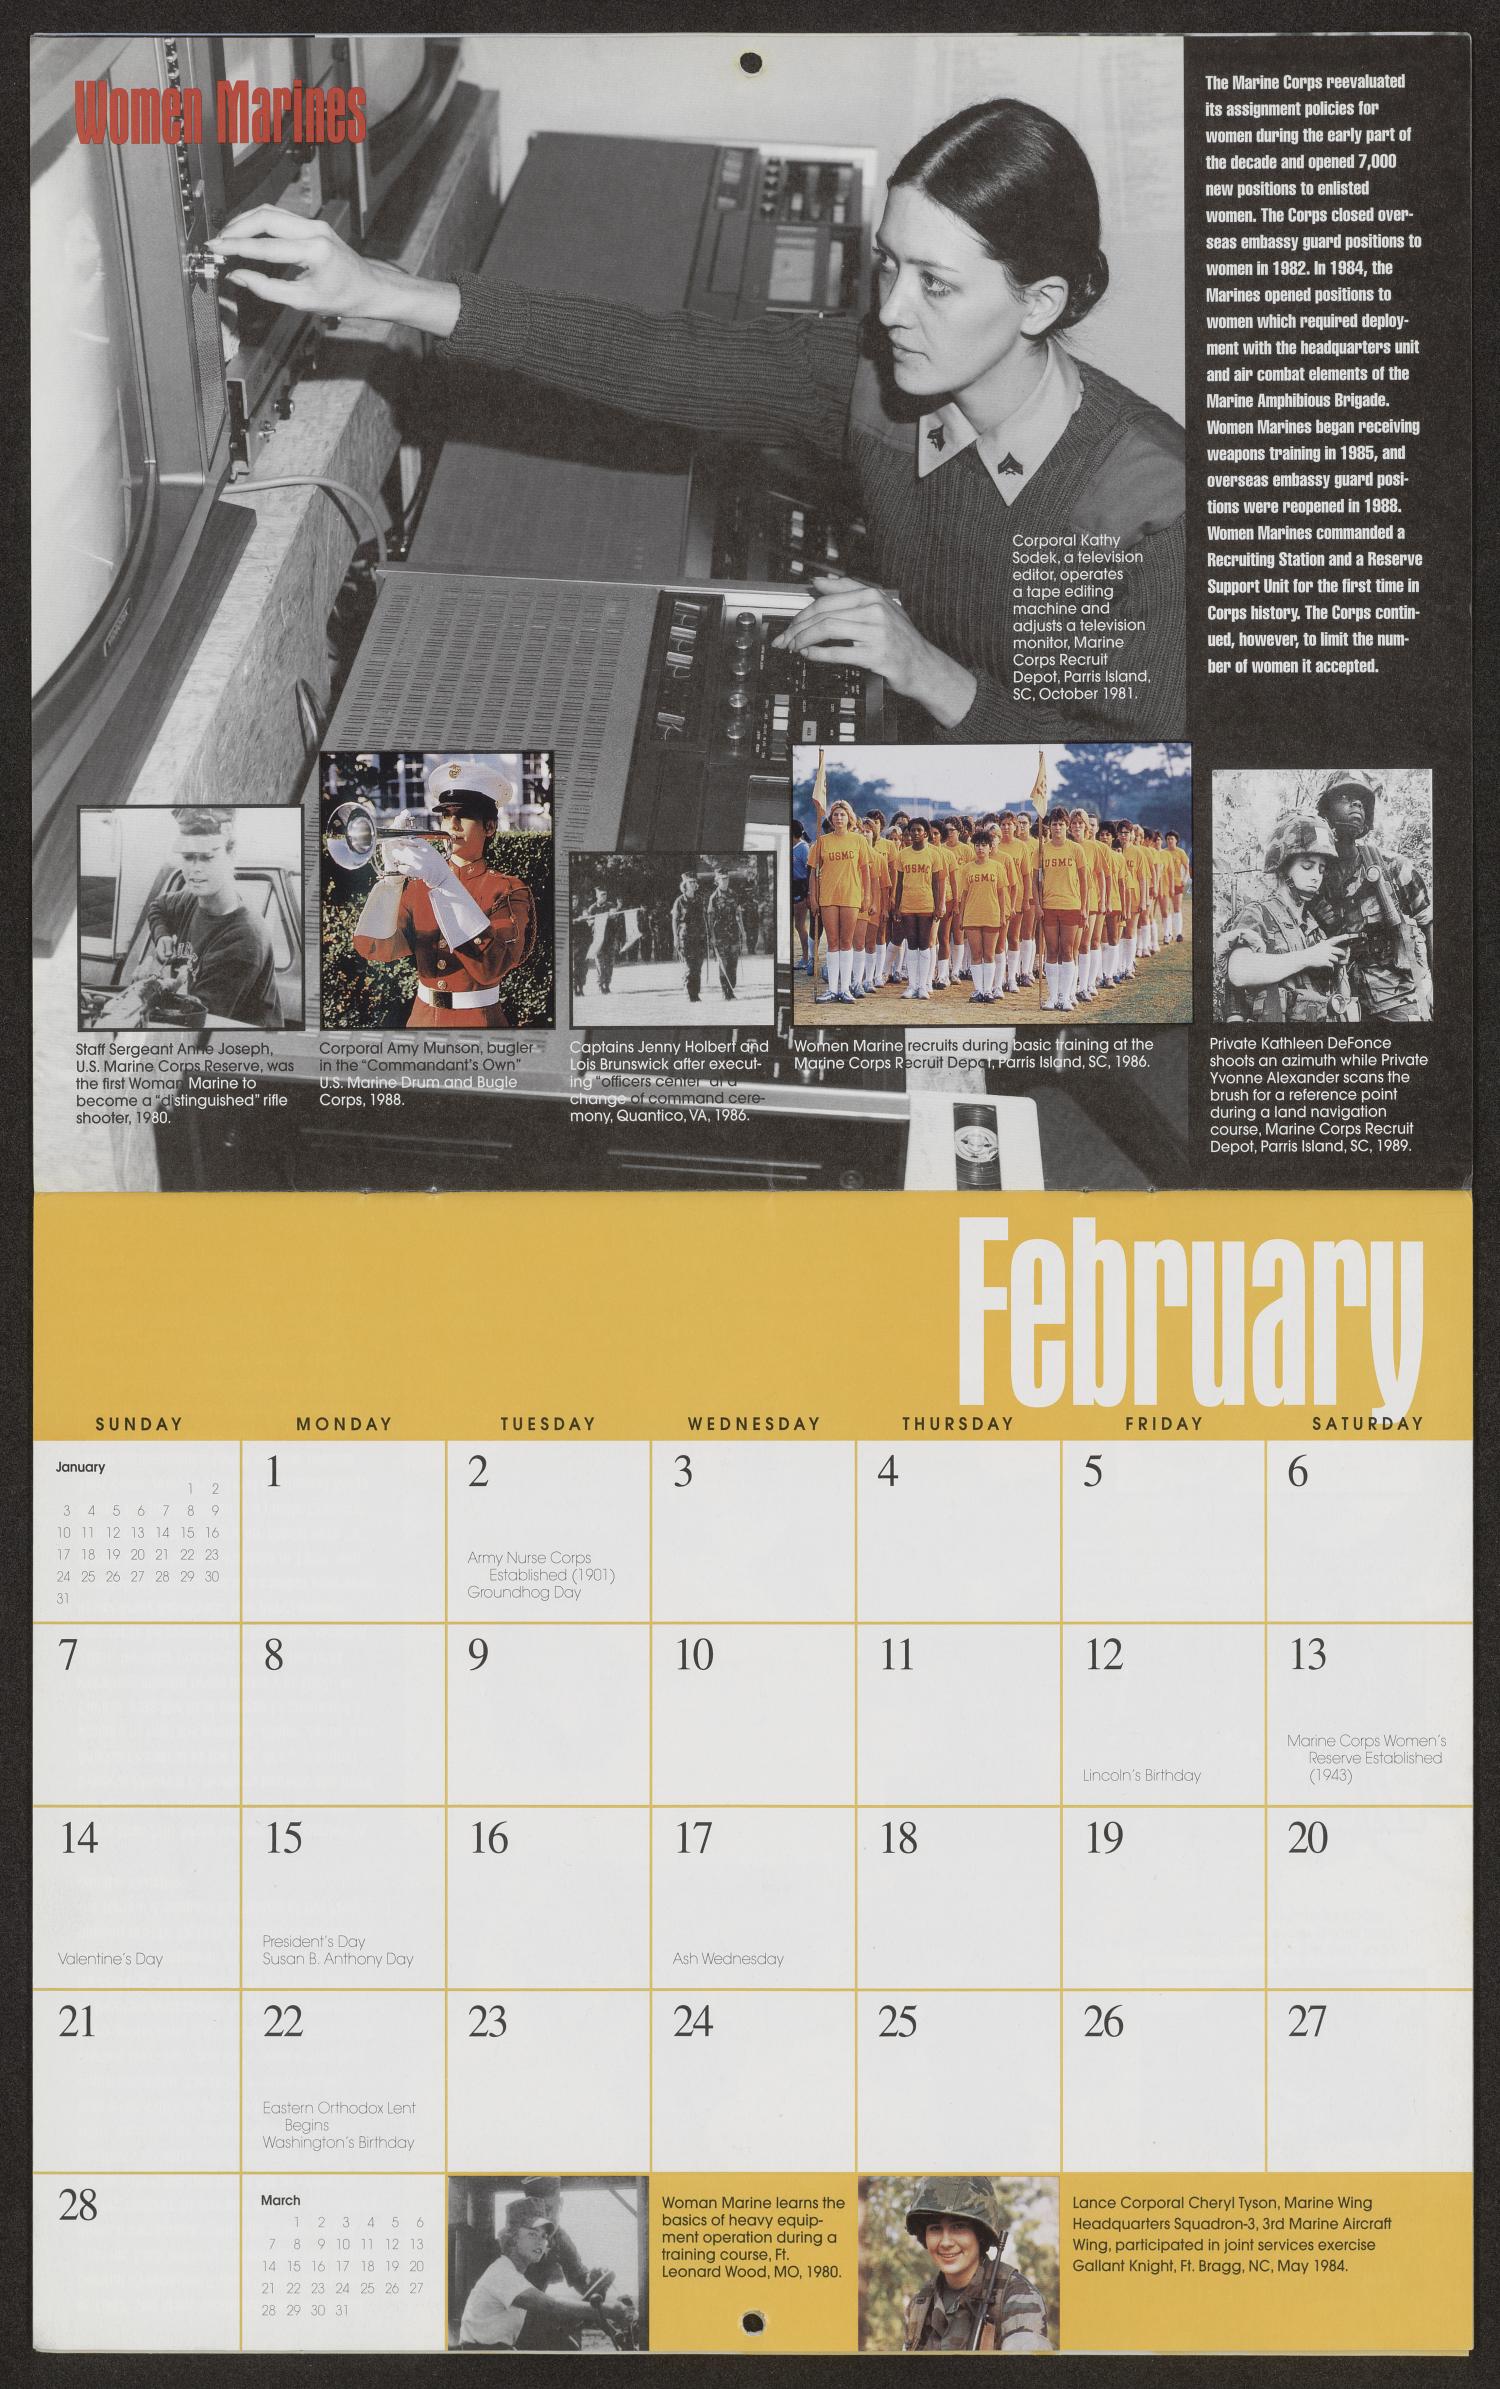 [The Women's Memorial1999 Special Edition Calendar]
                                                
                                                    [Sequence #]: 4 of 17
                                                